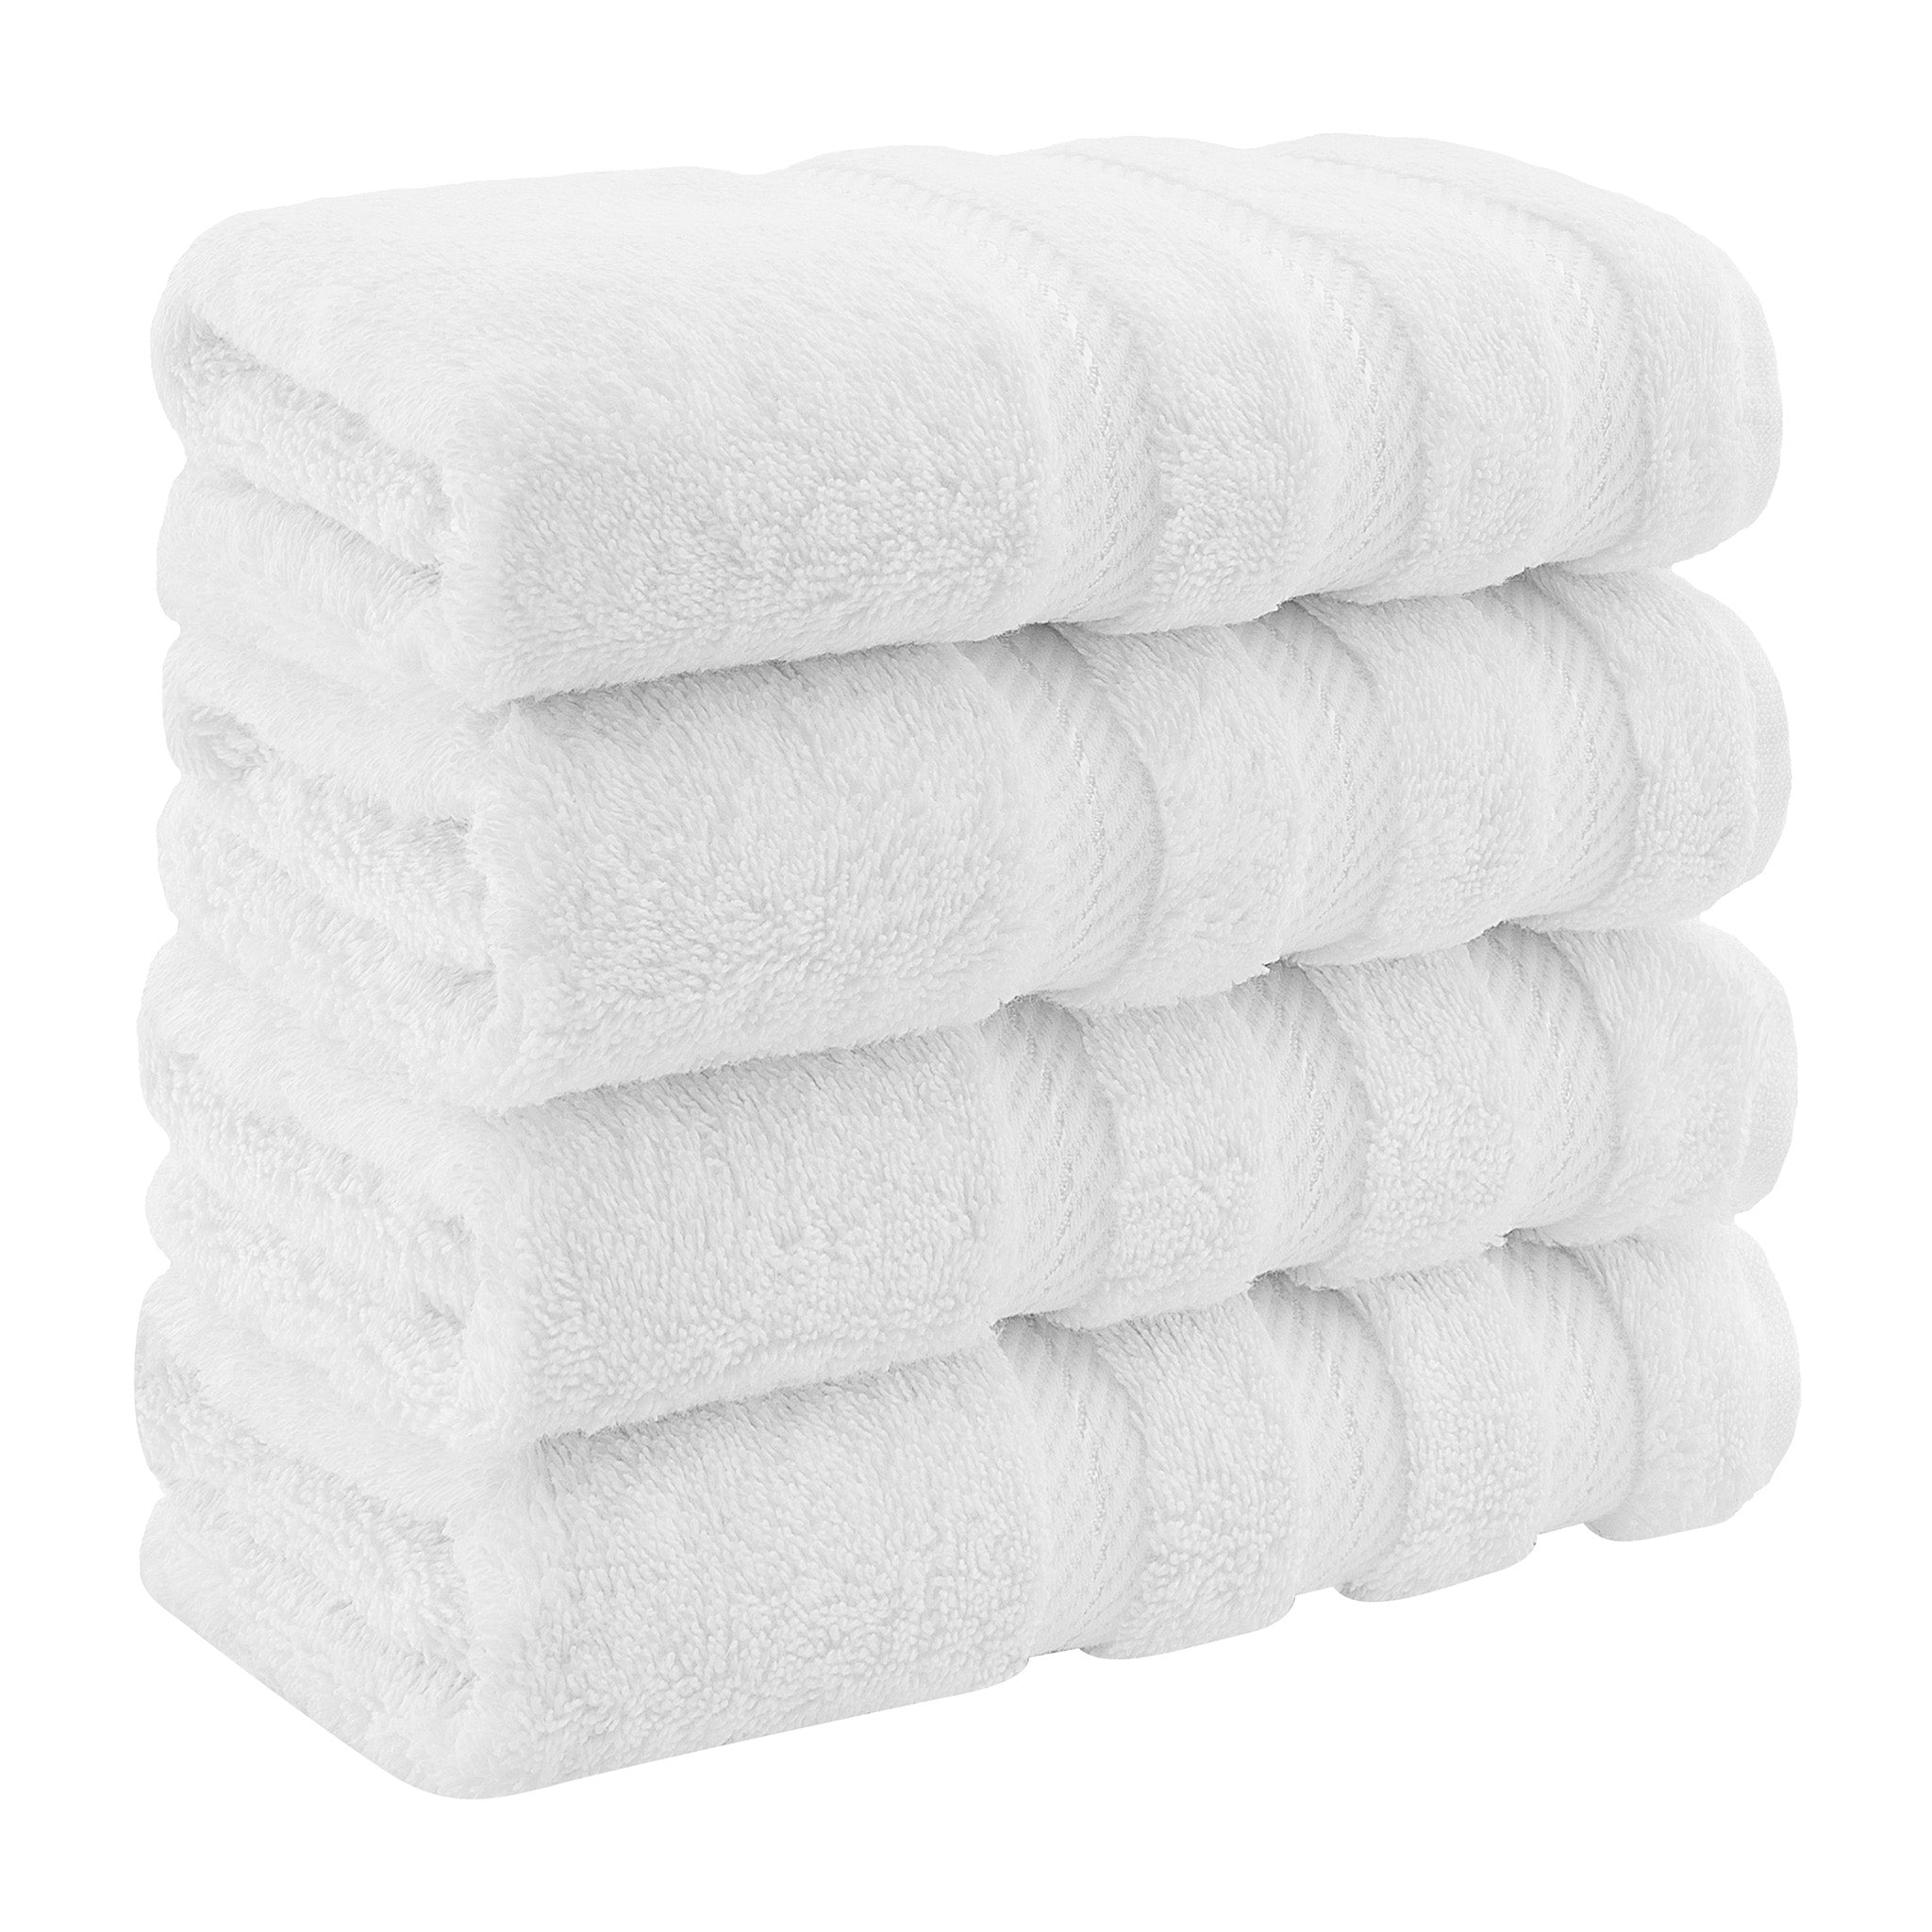 Bulk Towels: Wholesale at WebstaurantStore